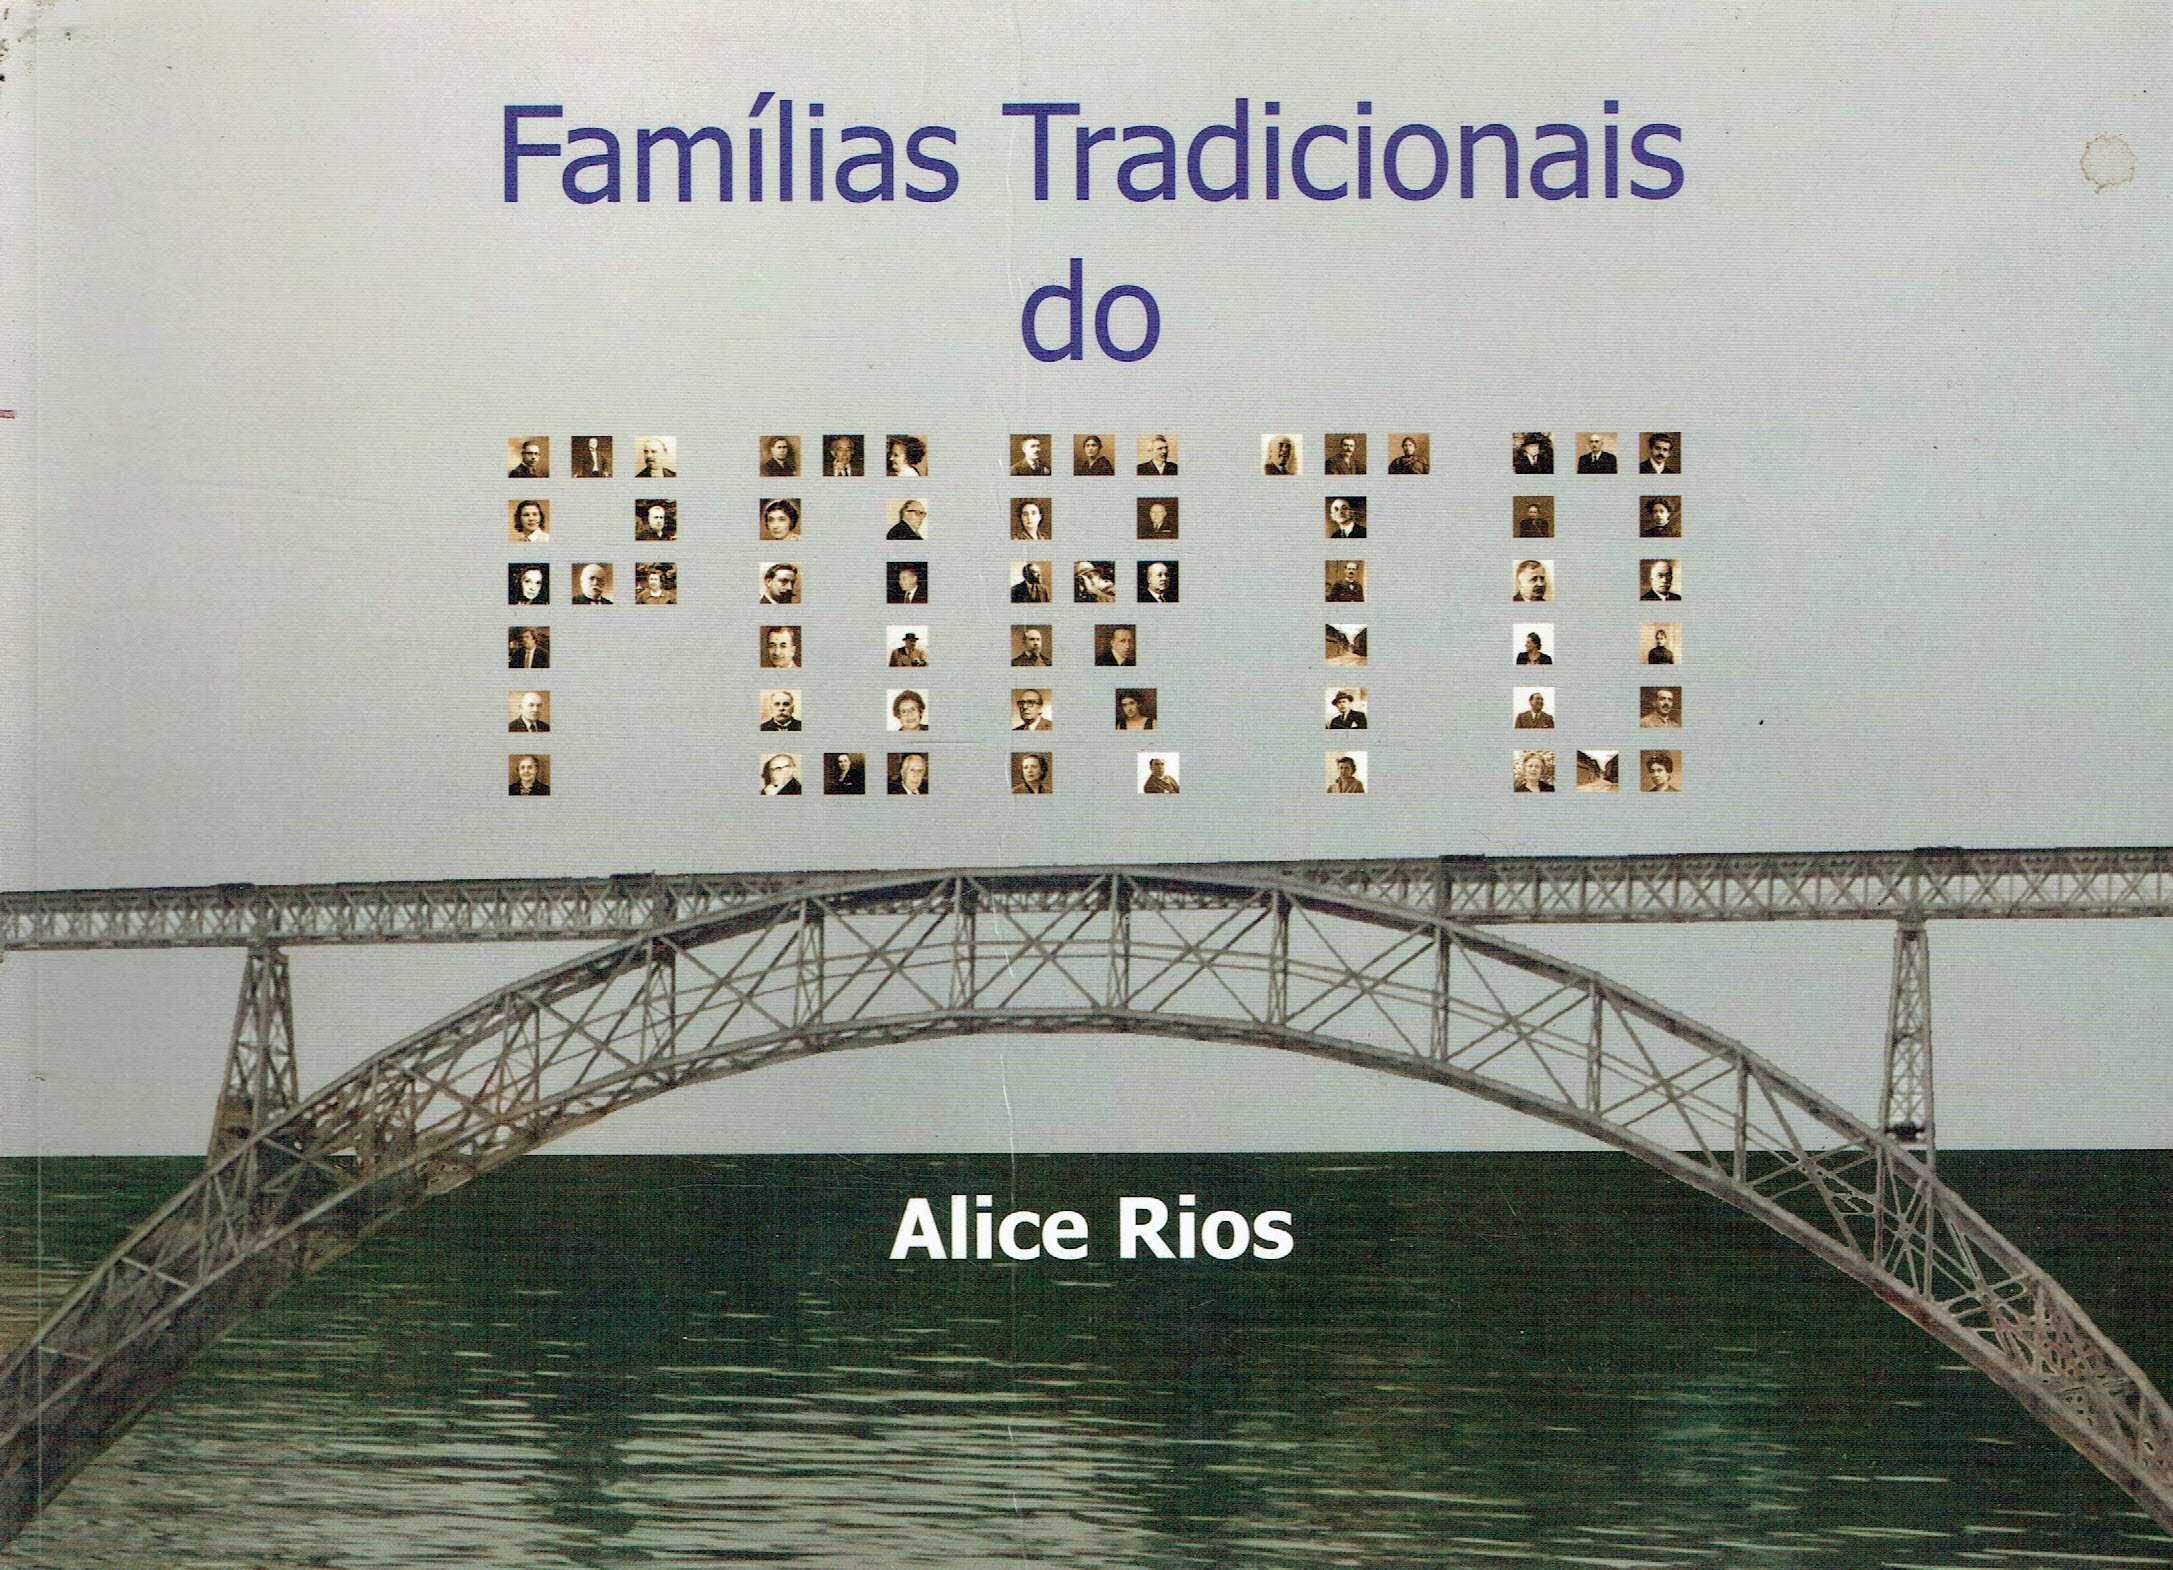 7331

Famílias Tradicionais do Porto
de Alice Rios